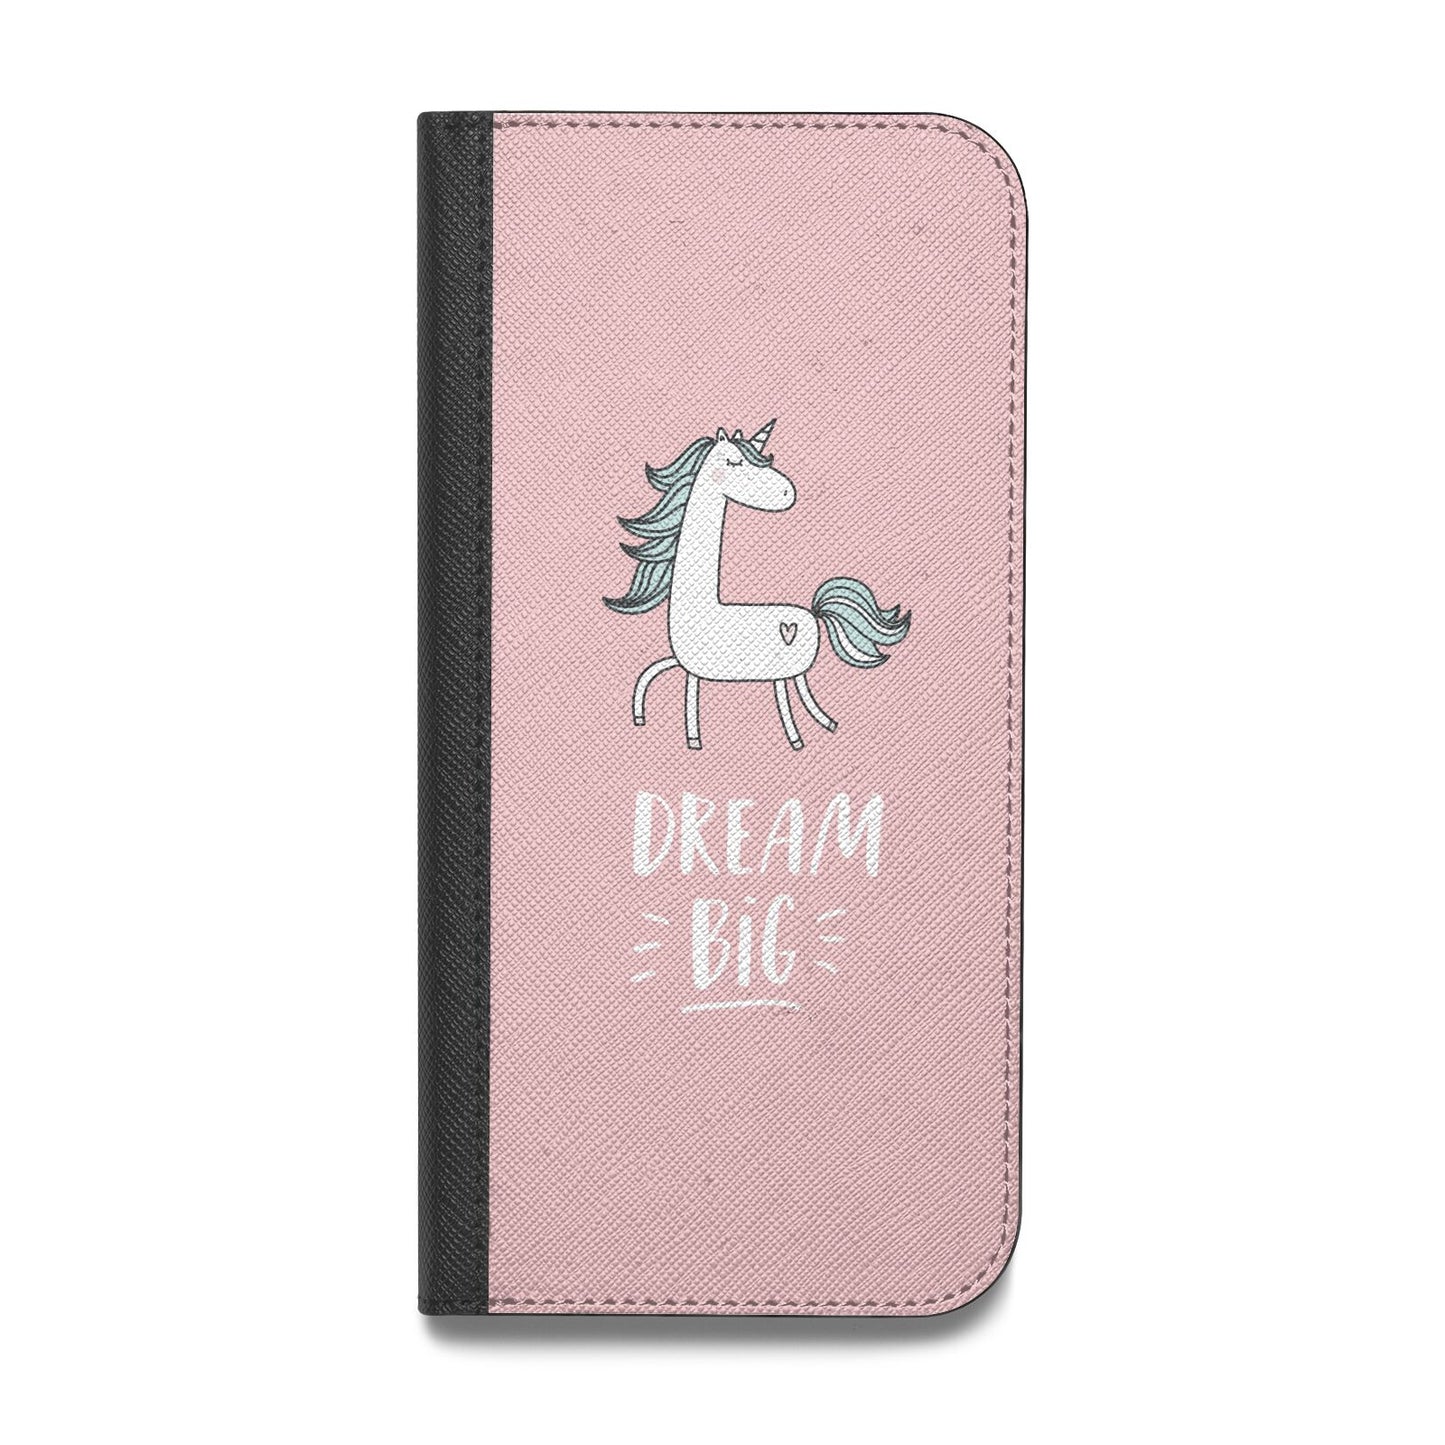 Unicorn Print Dream Big Vegan Leather Flip iPhone Case